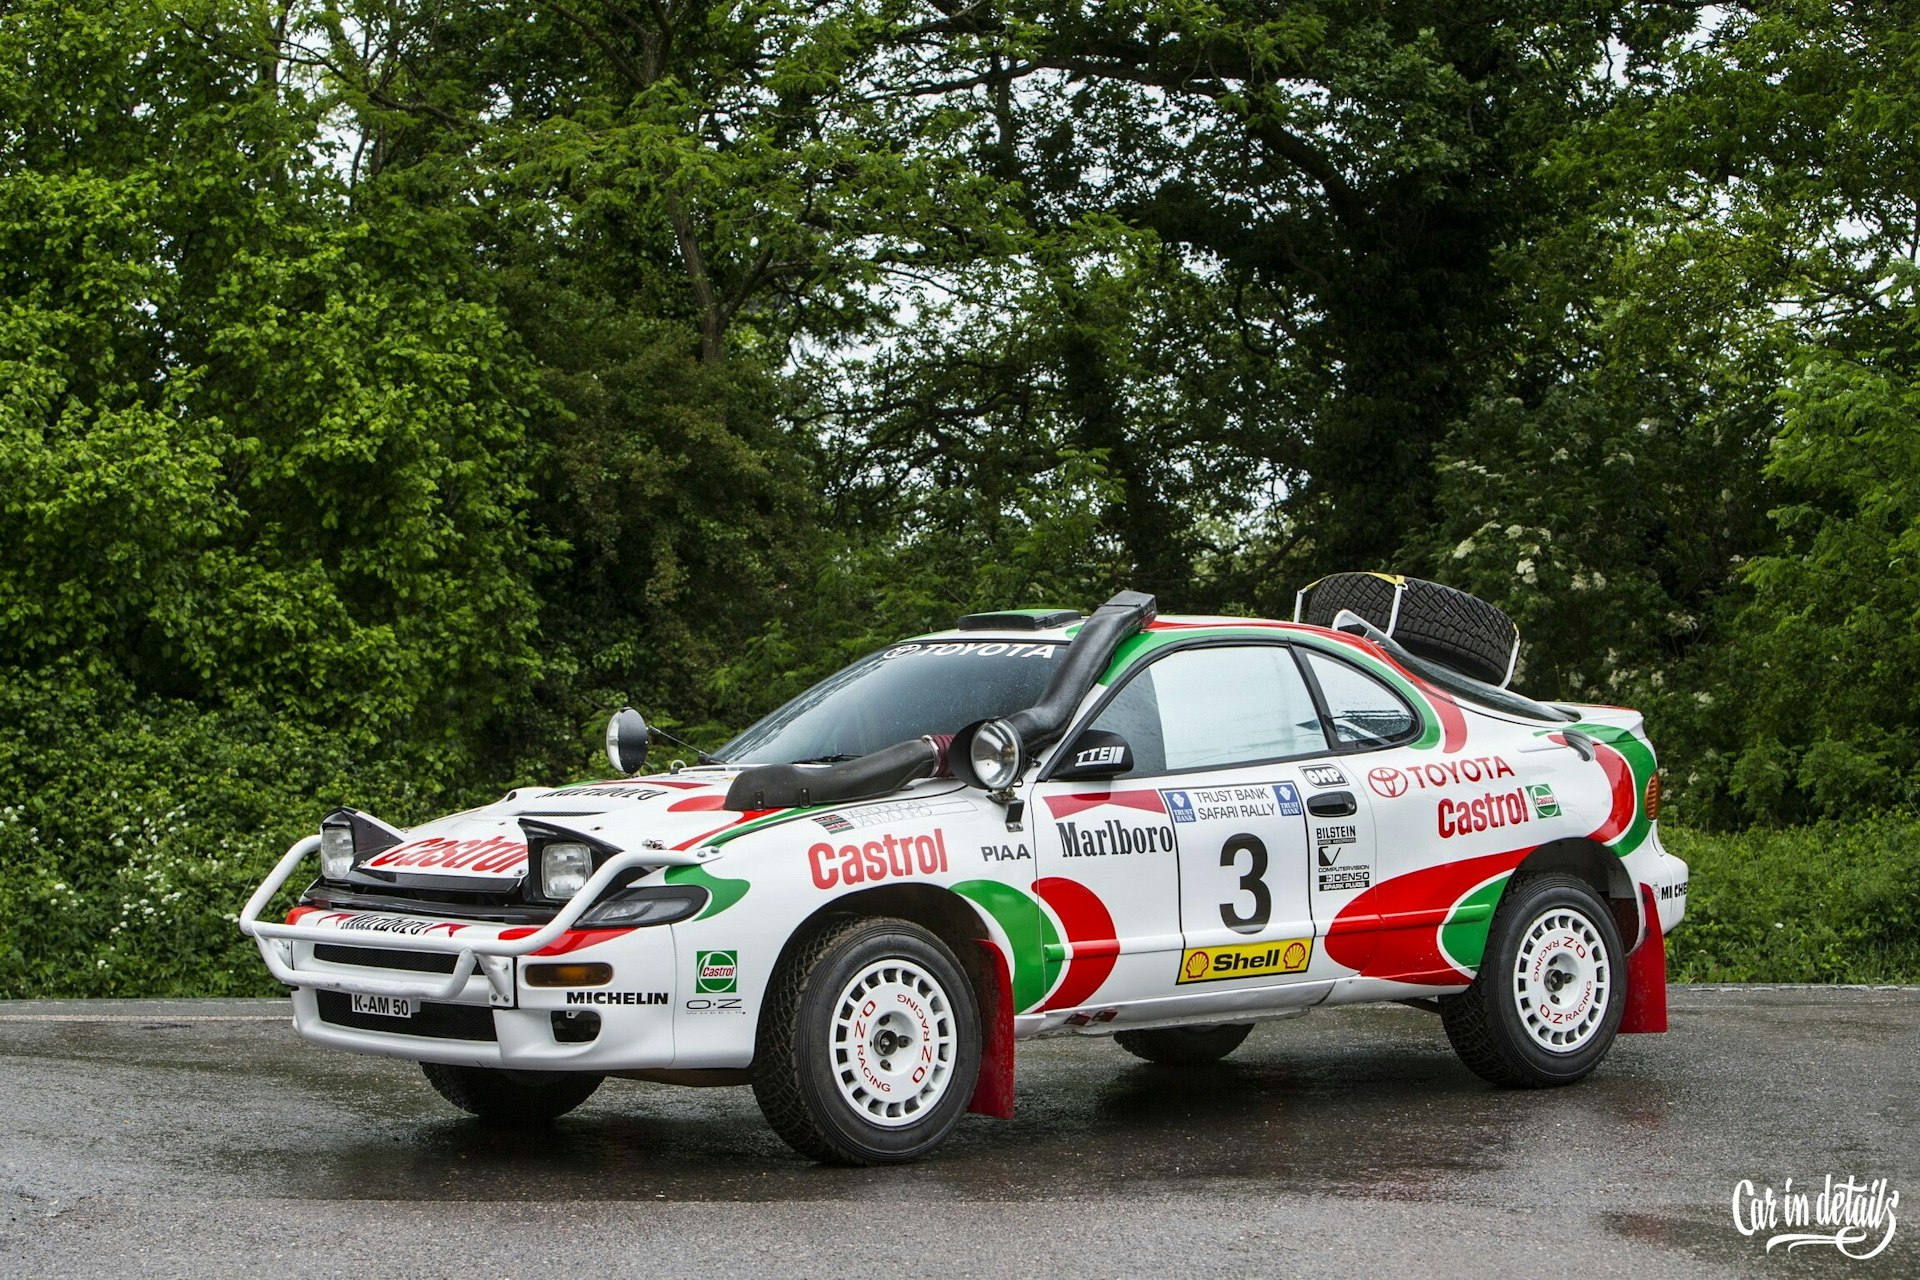 Celica rally car